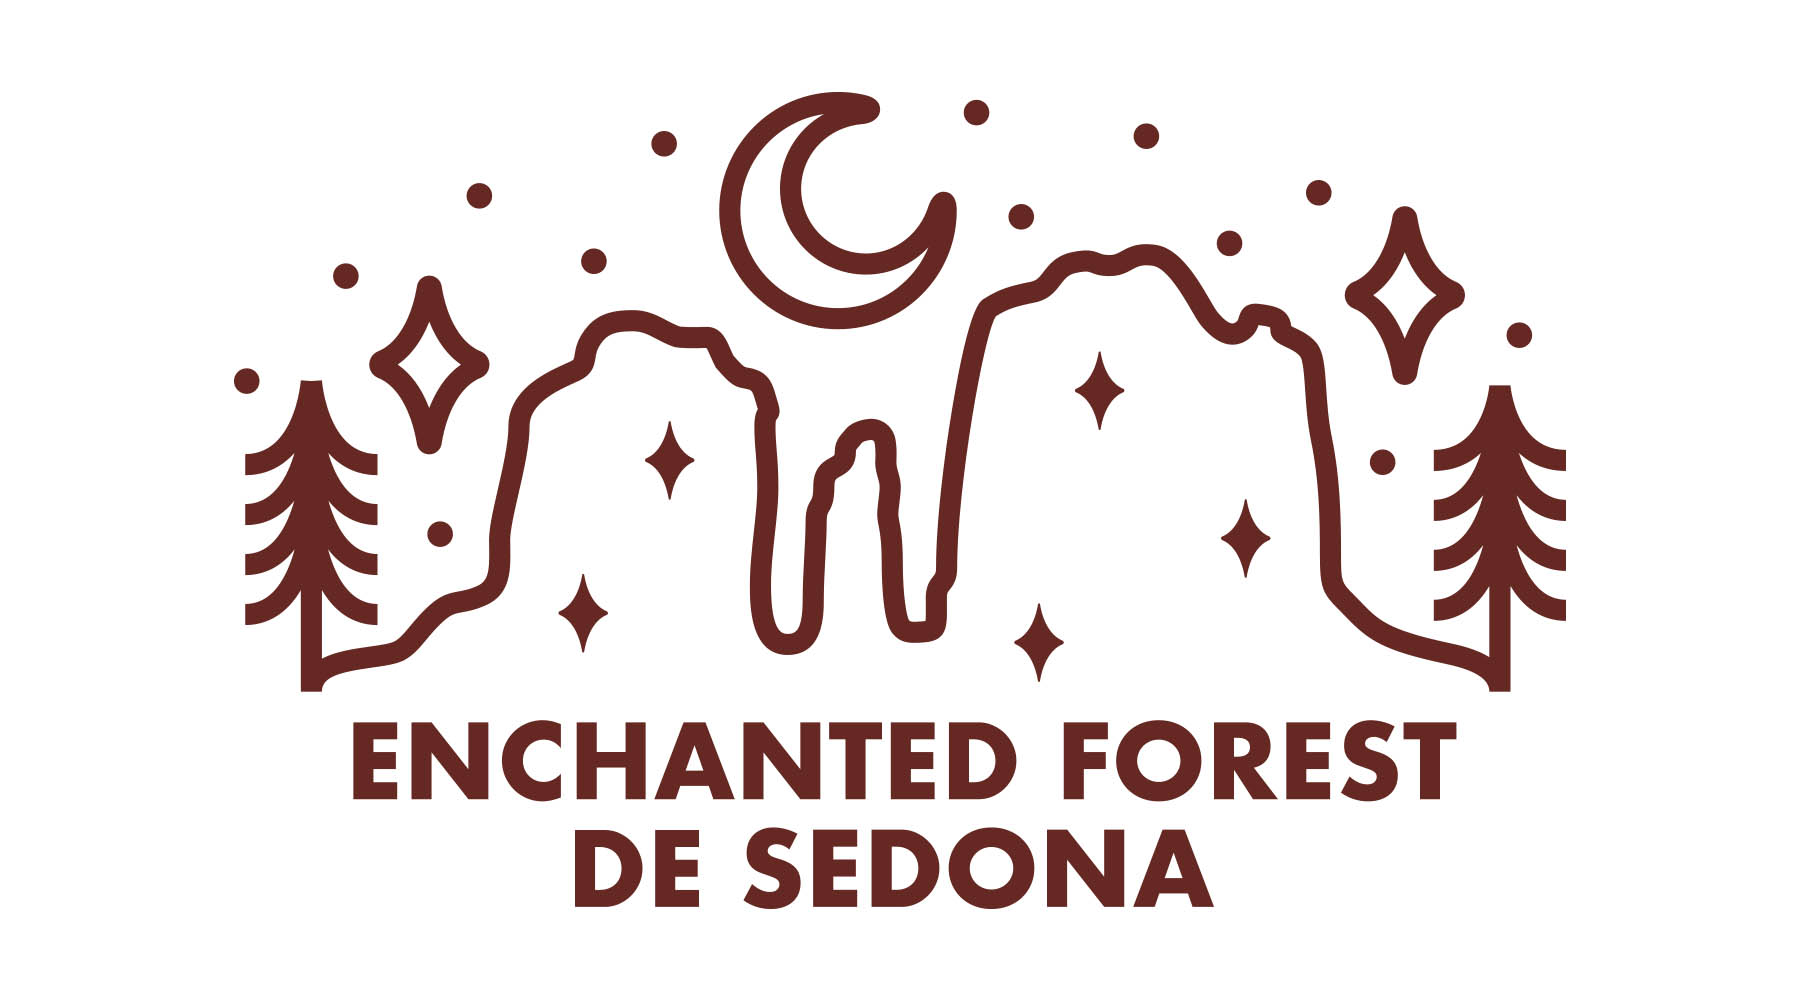 akyros art design company branding development for enchanted forest de sedona